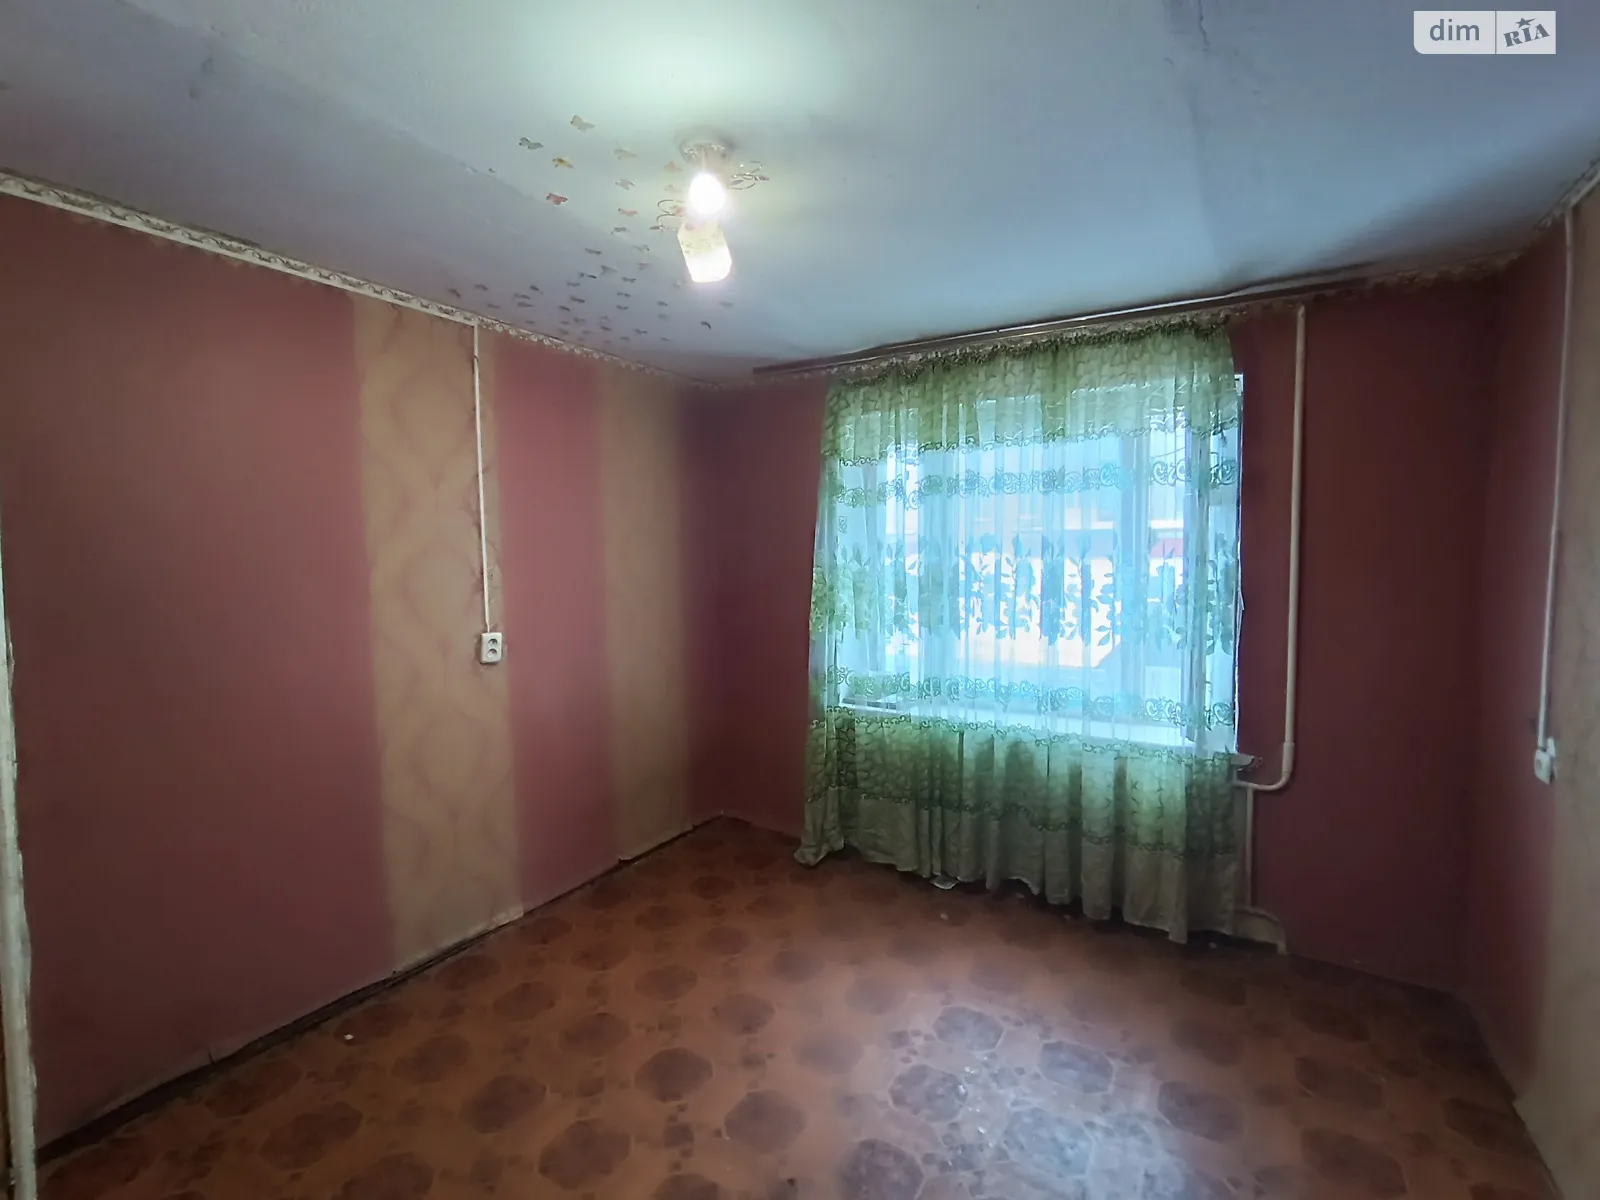 Продается комната 14 кв. м в Виннице, цена: 14000 $ - фото 1